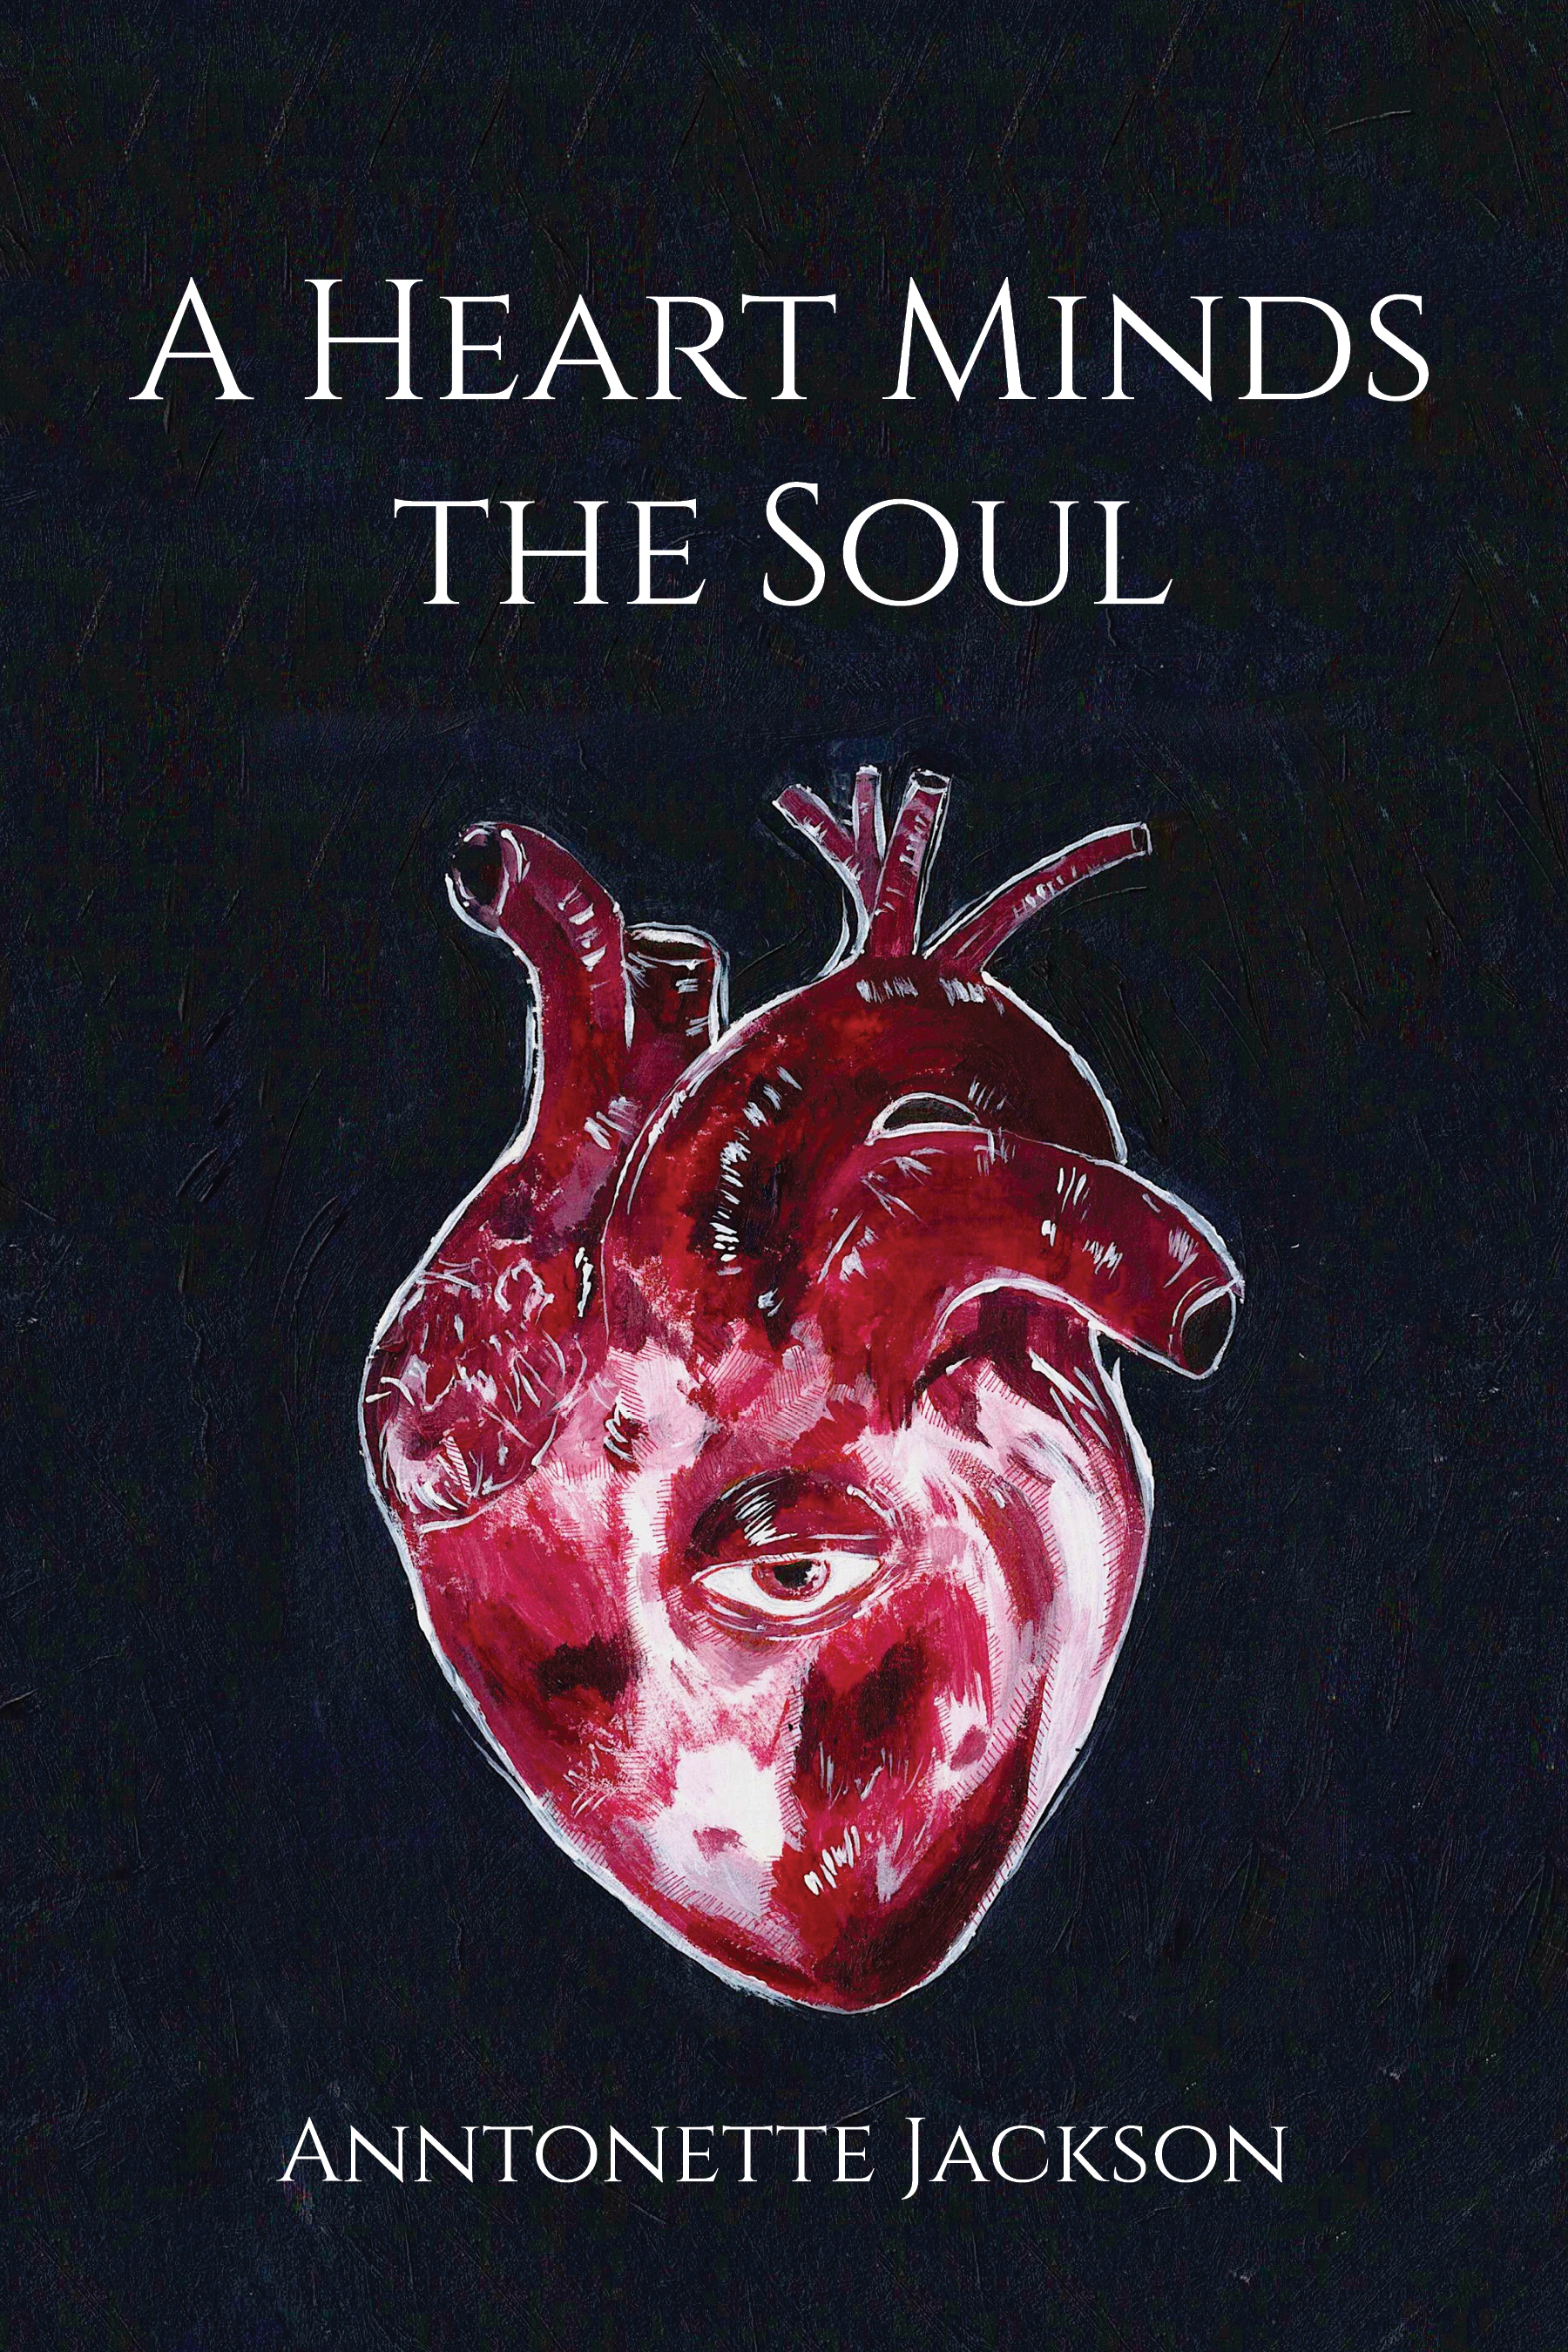 A Heart Minds the Soul by Anntonette Jackson